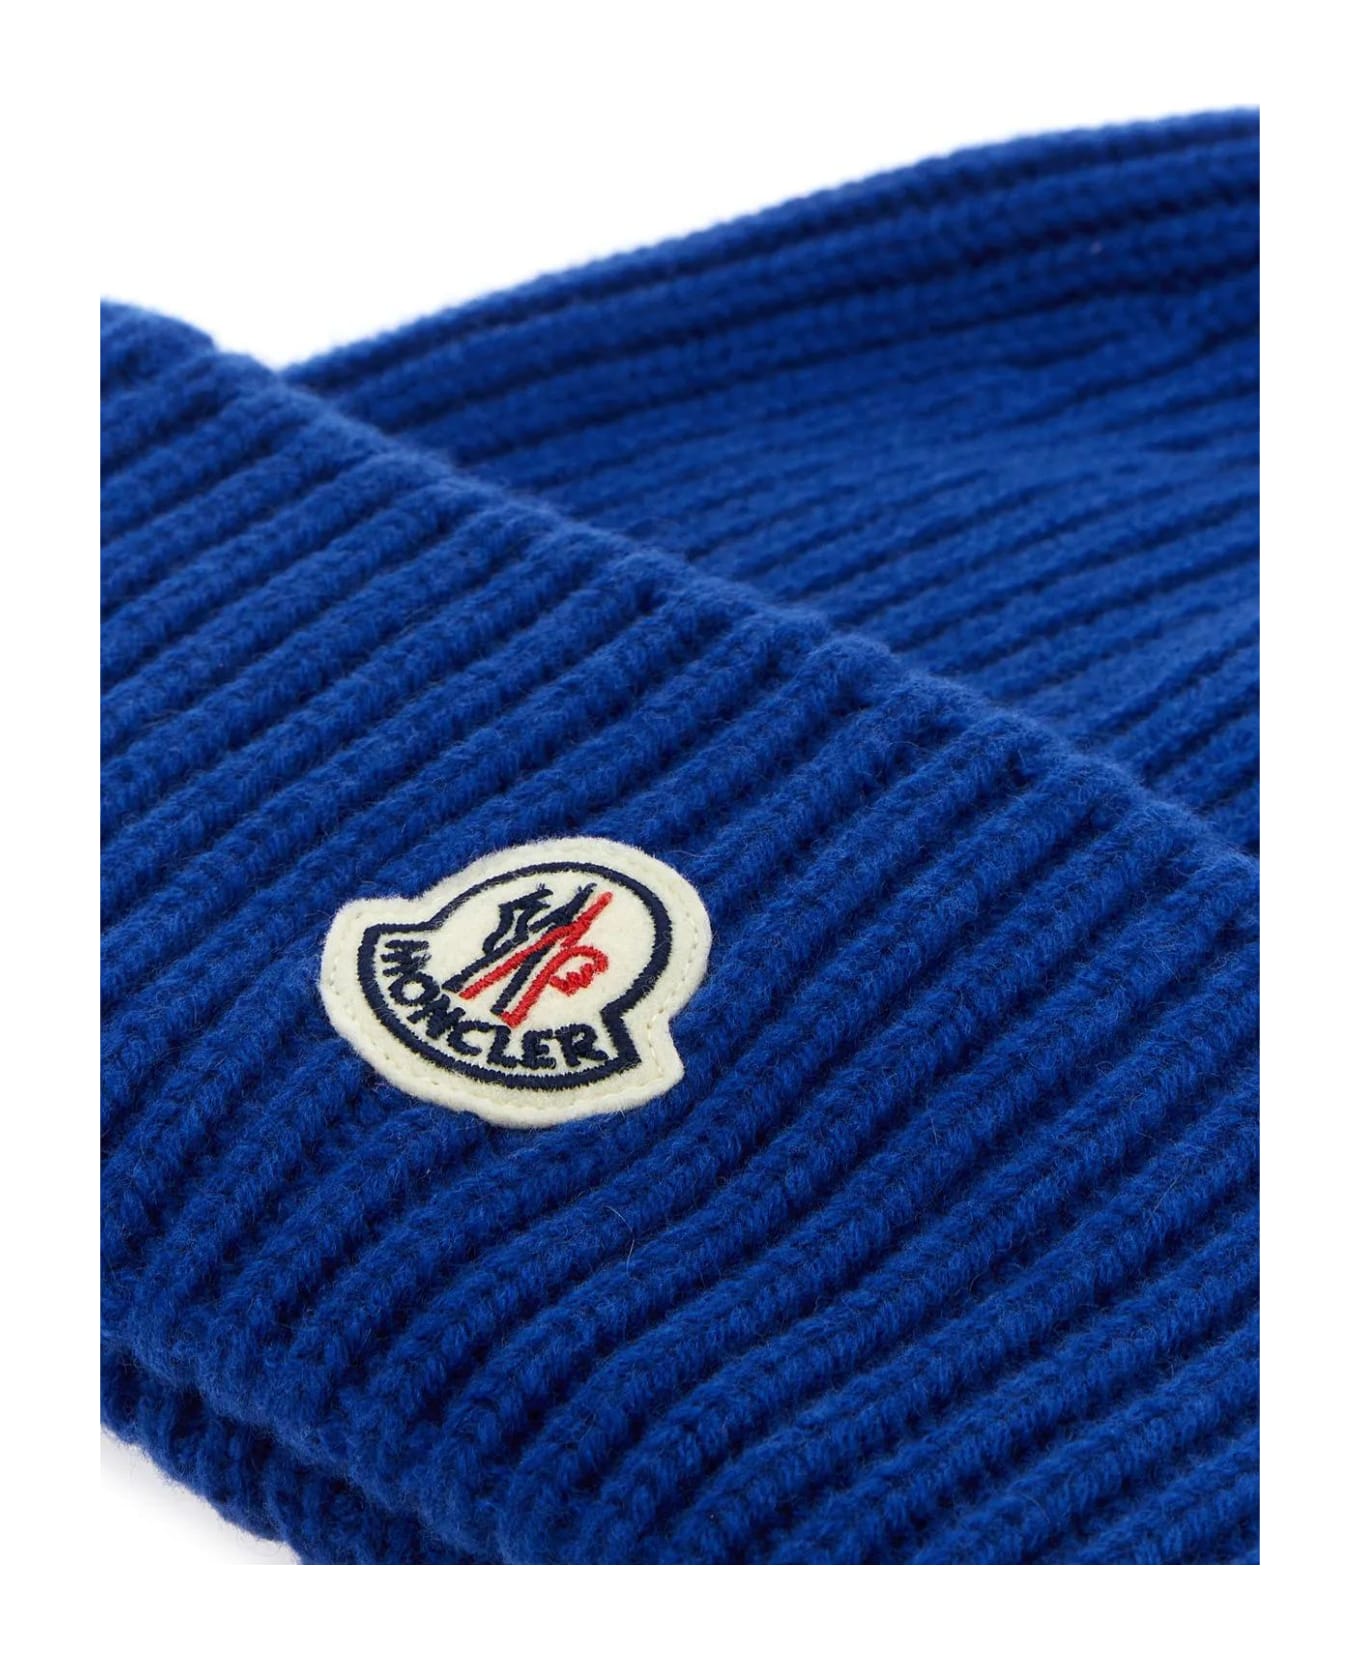 Moncler Electric Blue Wool Blend Beanie Hat - Blue